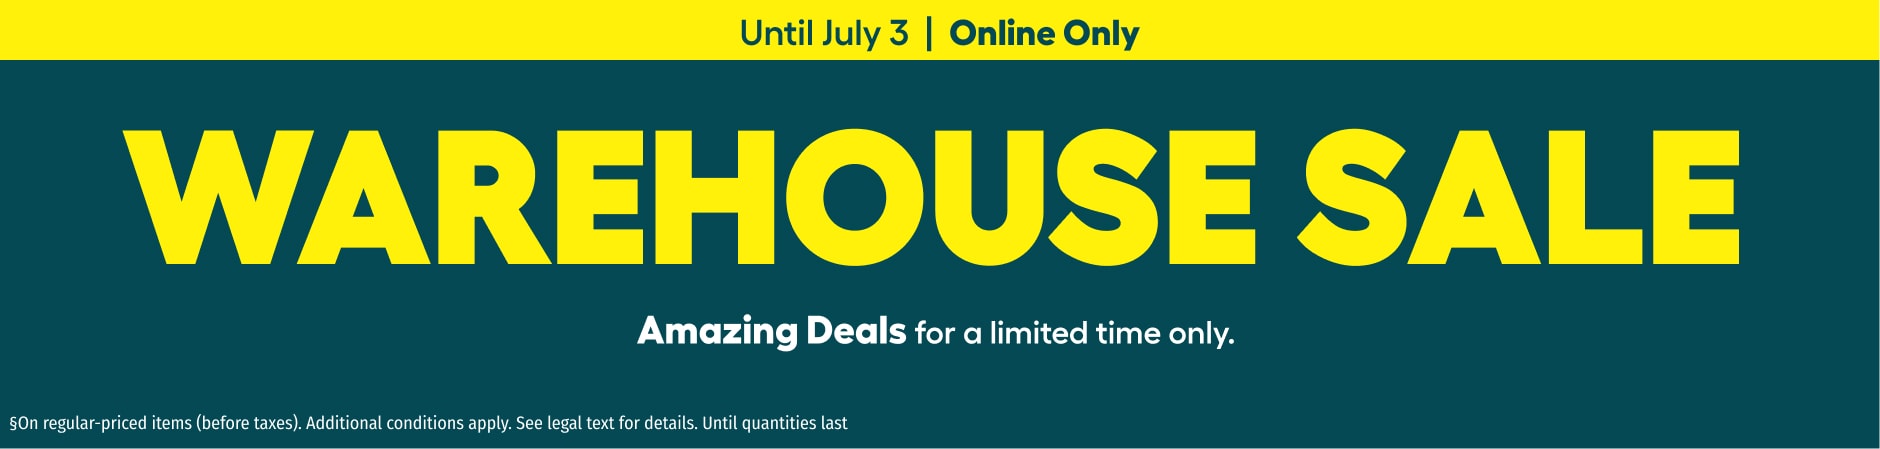 Online warehouse sale